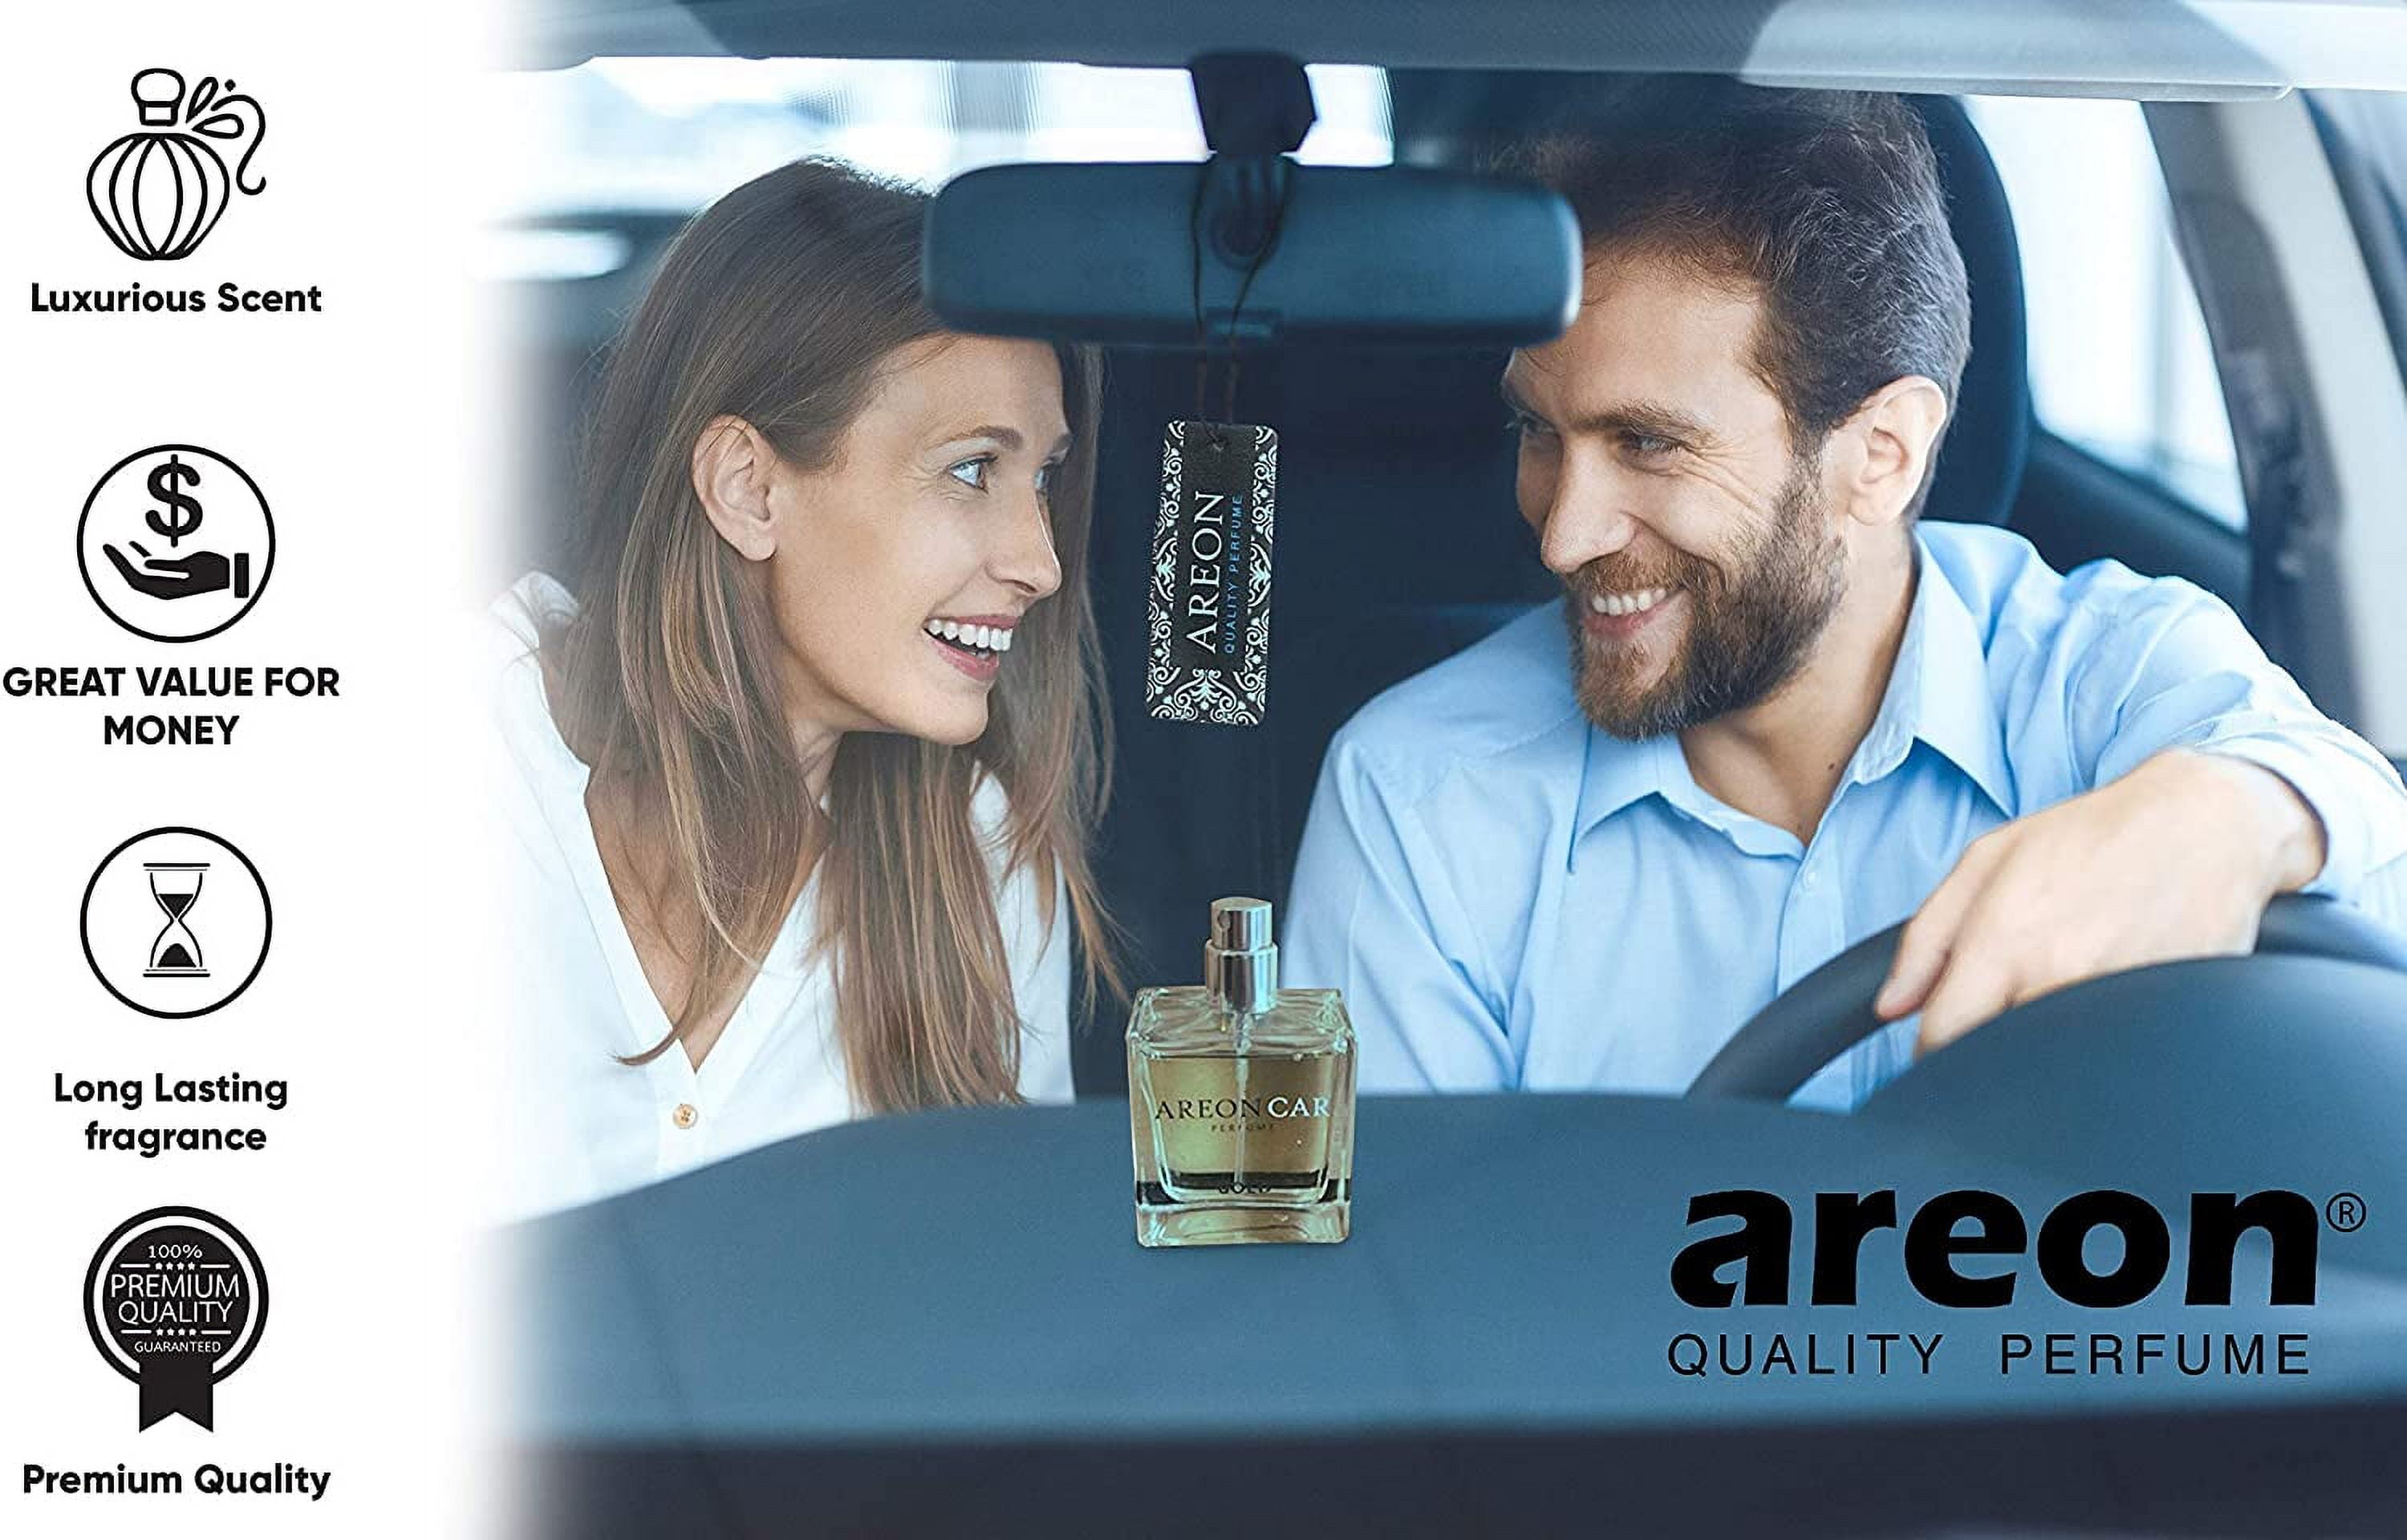 AREON Car Perfume 1.7 Fl Oz. (50ml) Glass Bottle Cologne Air Freshener for  Cars